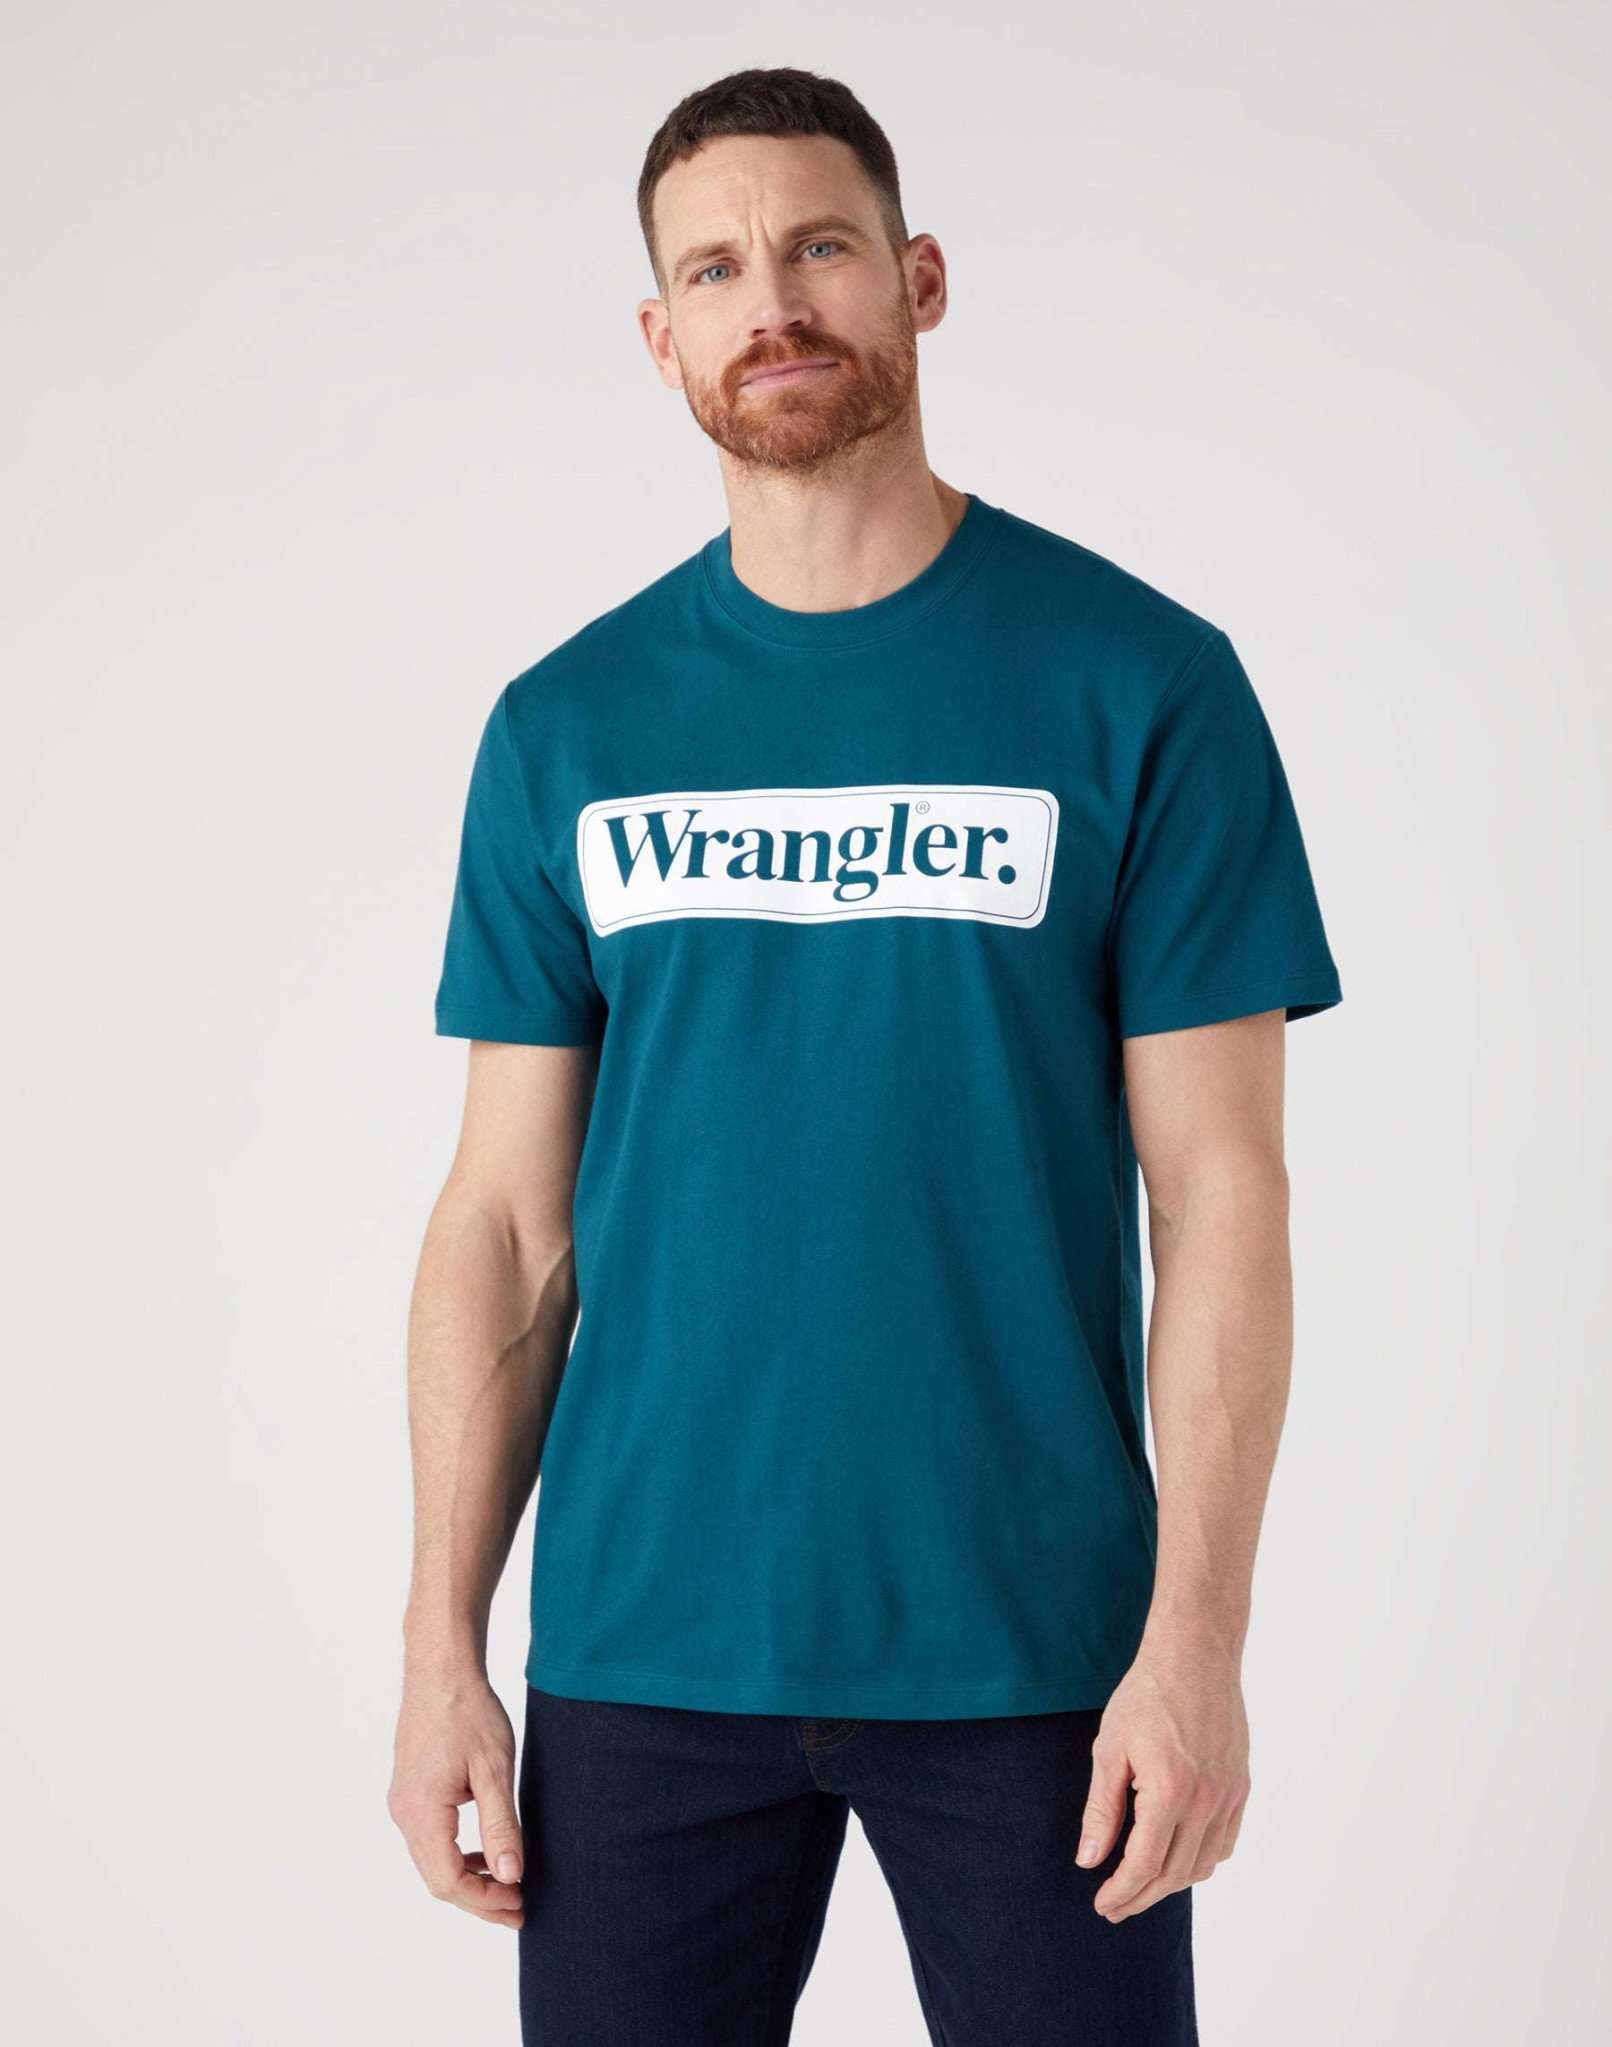 Wrangler Tee in Deep Teal Green T-Shirts Wrangler   